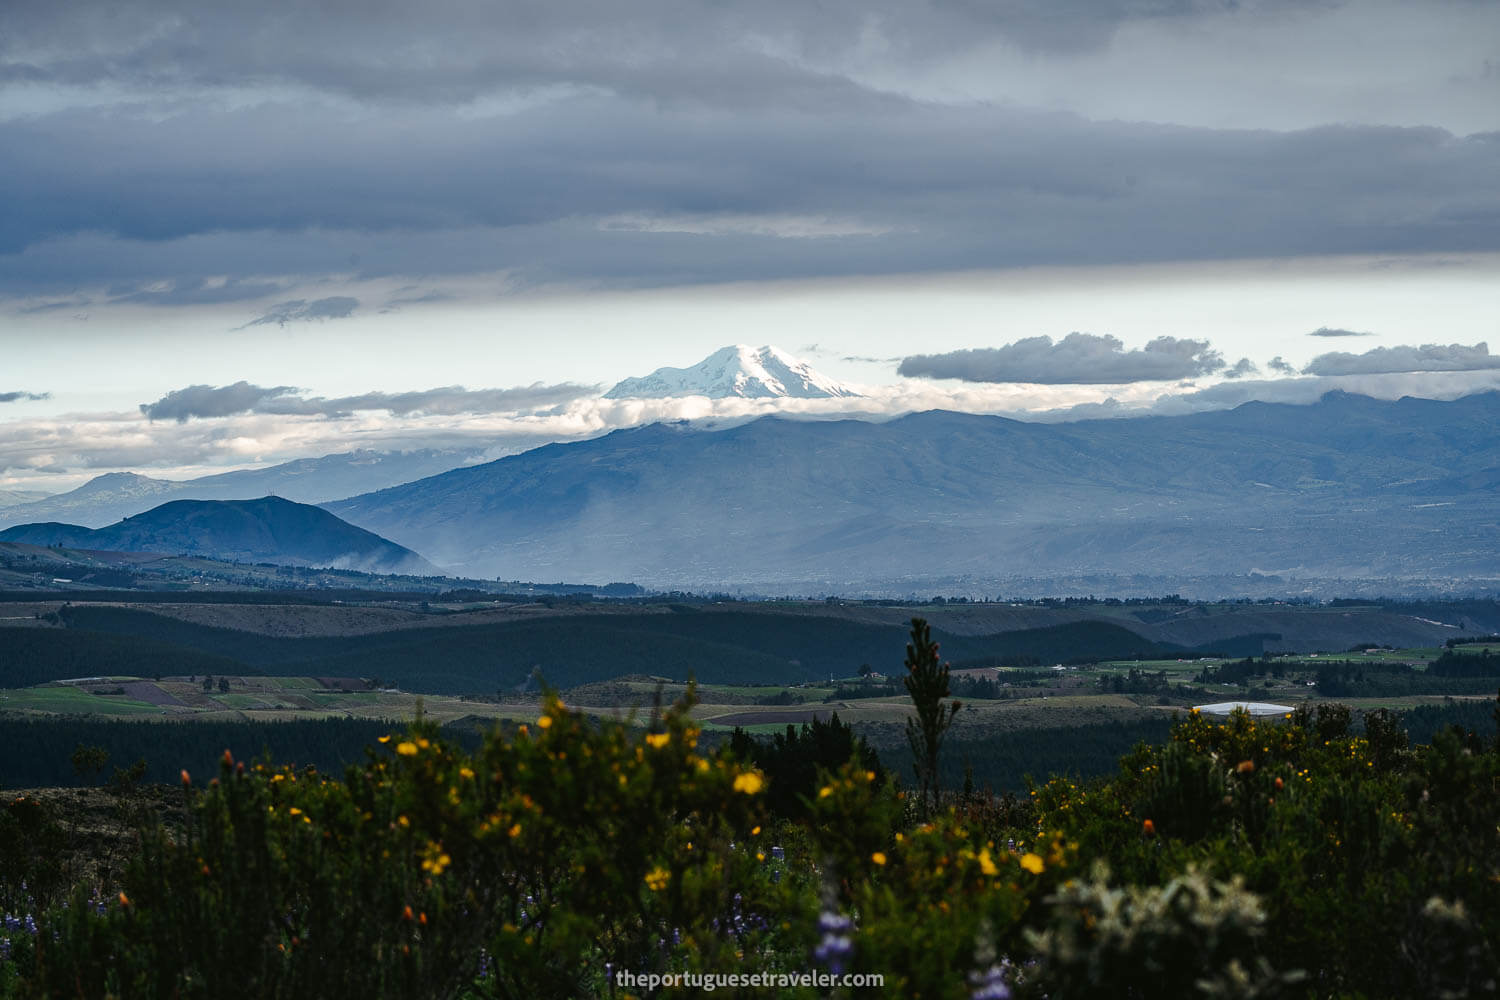 Chimborazo Volcano at the distance